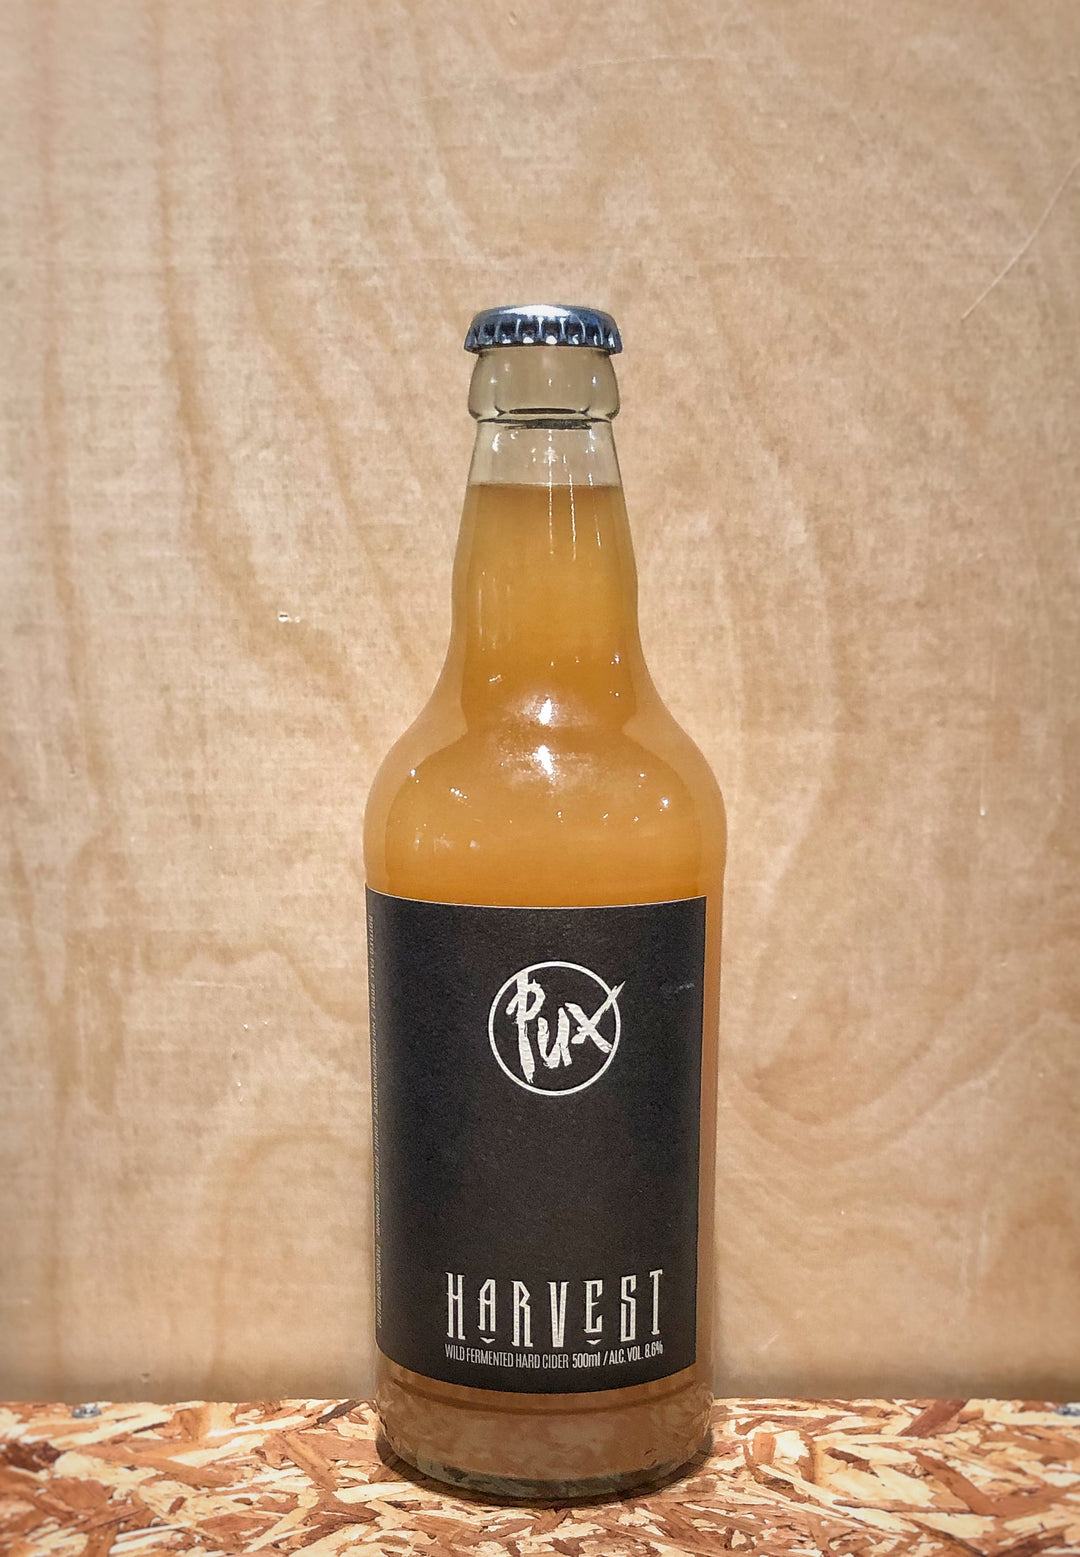 Pux 'Harvest' Wild Fermented Pet-Nat Hard Cider (Conklin, MI)